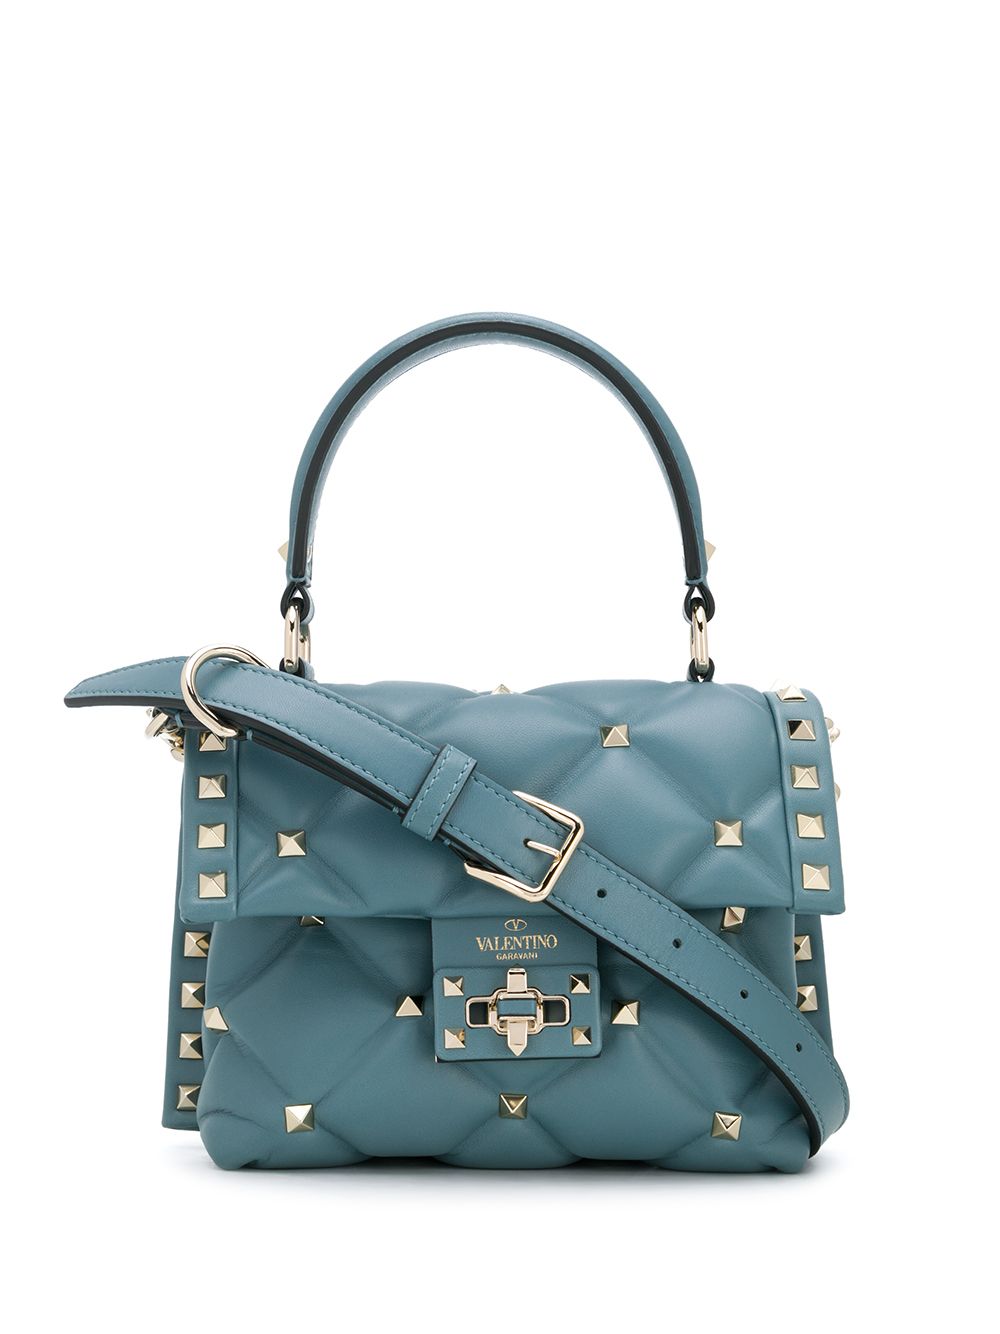 Valentino Garavani Candystud Mini Bag In Blue